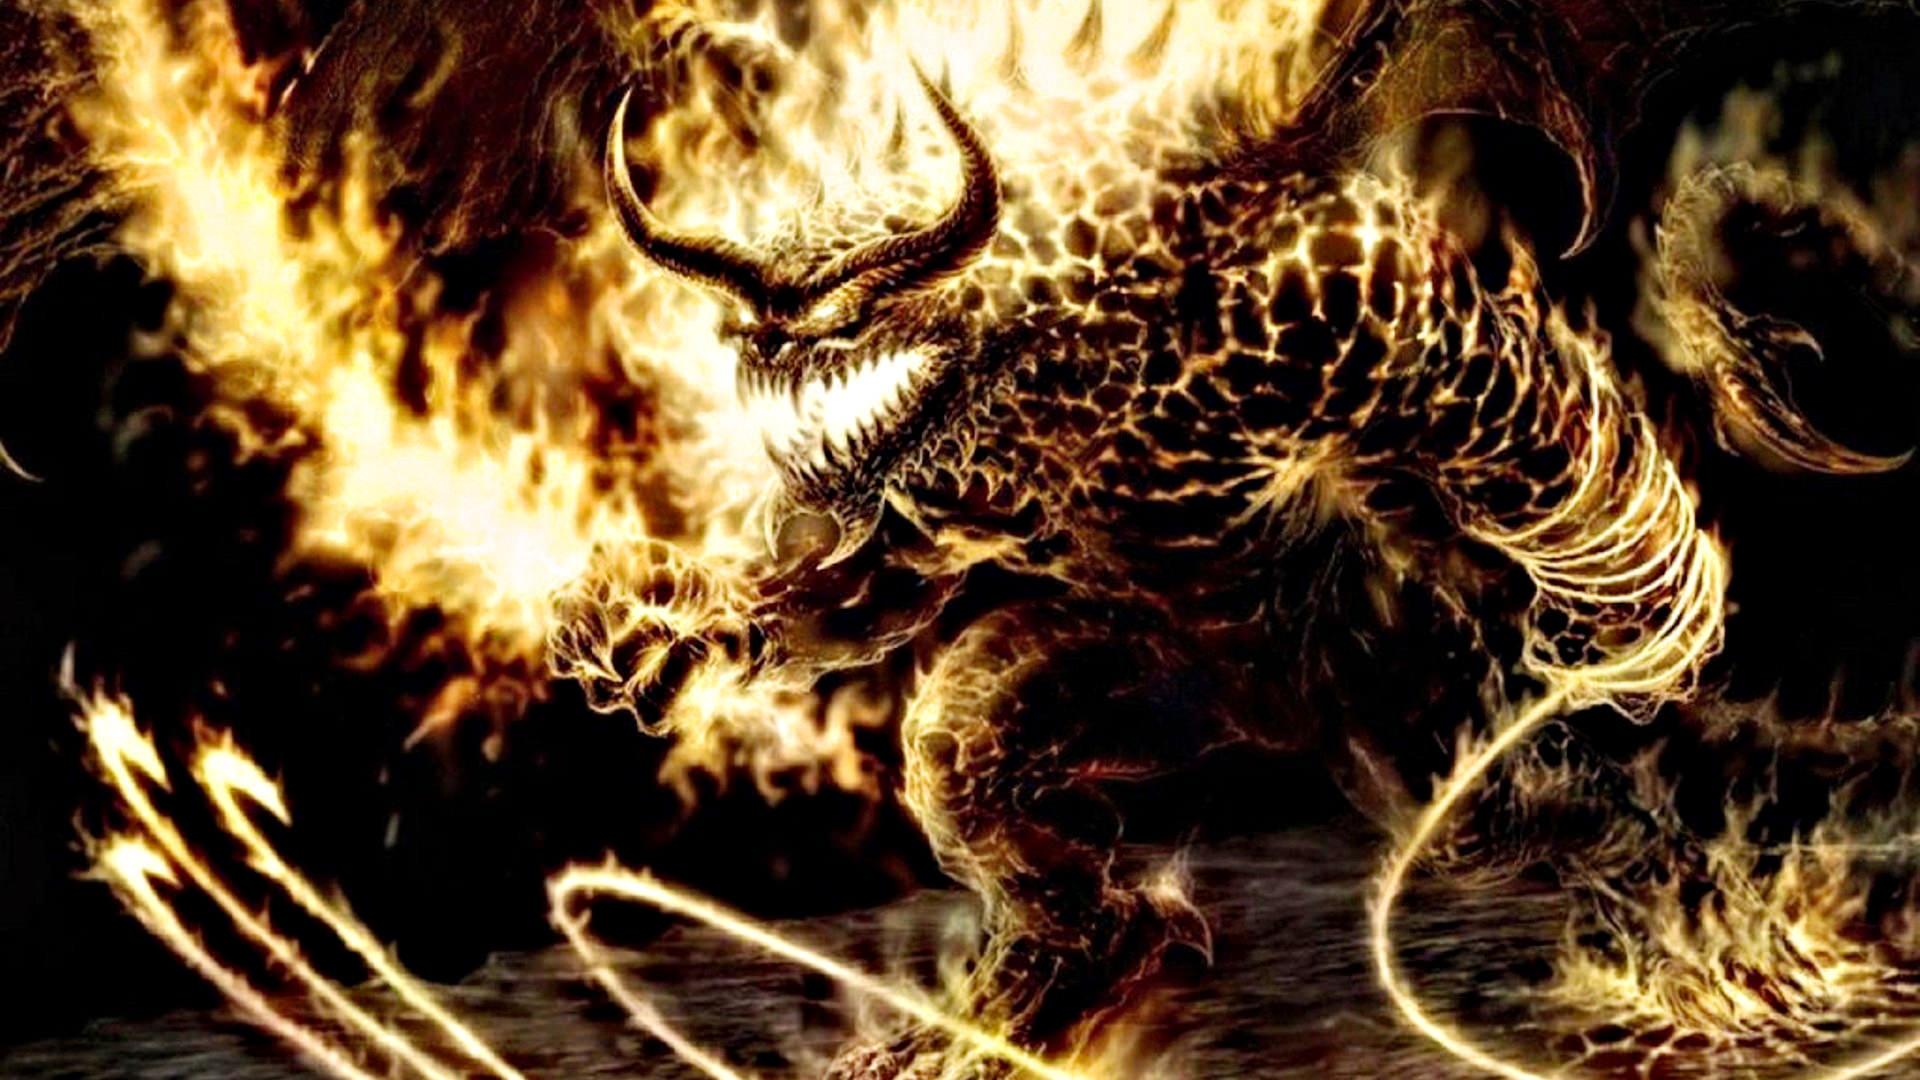 Bull Devil Demon Of Hell Wallpaper HD 3219 Wallpaper. High